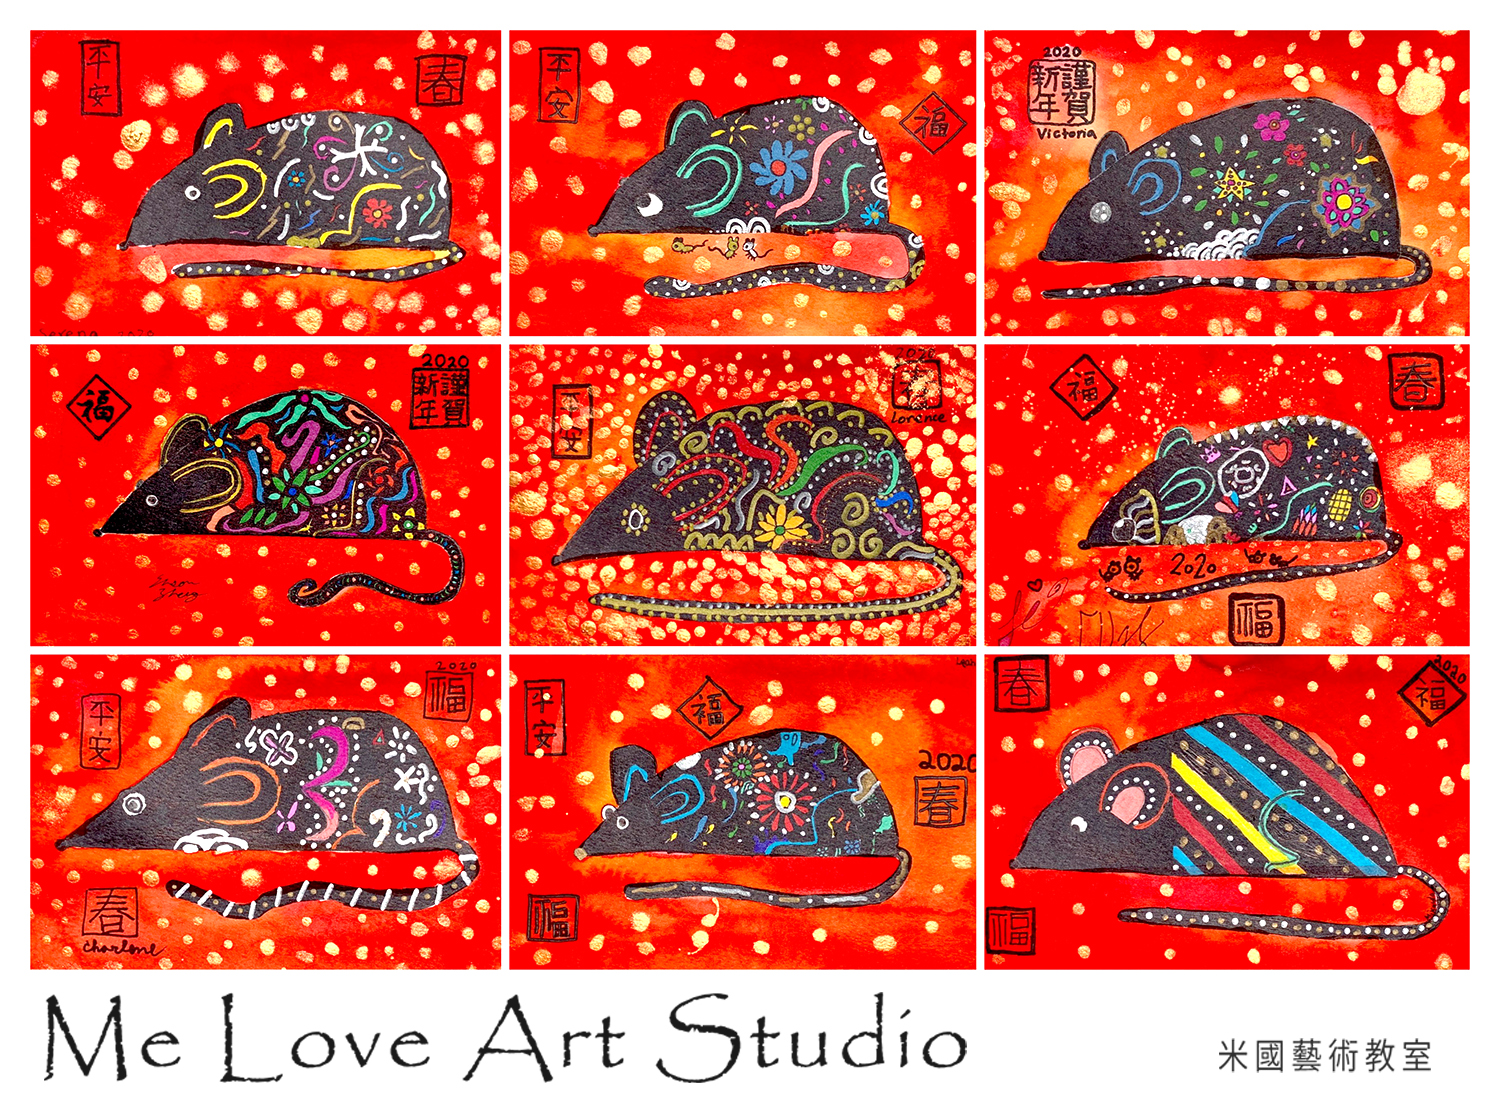 I Love Art Studio - I love art studio